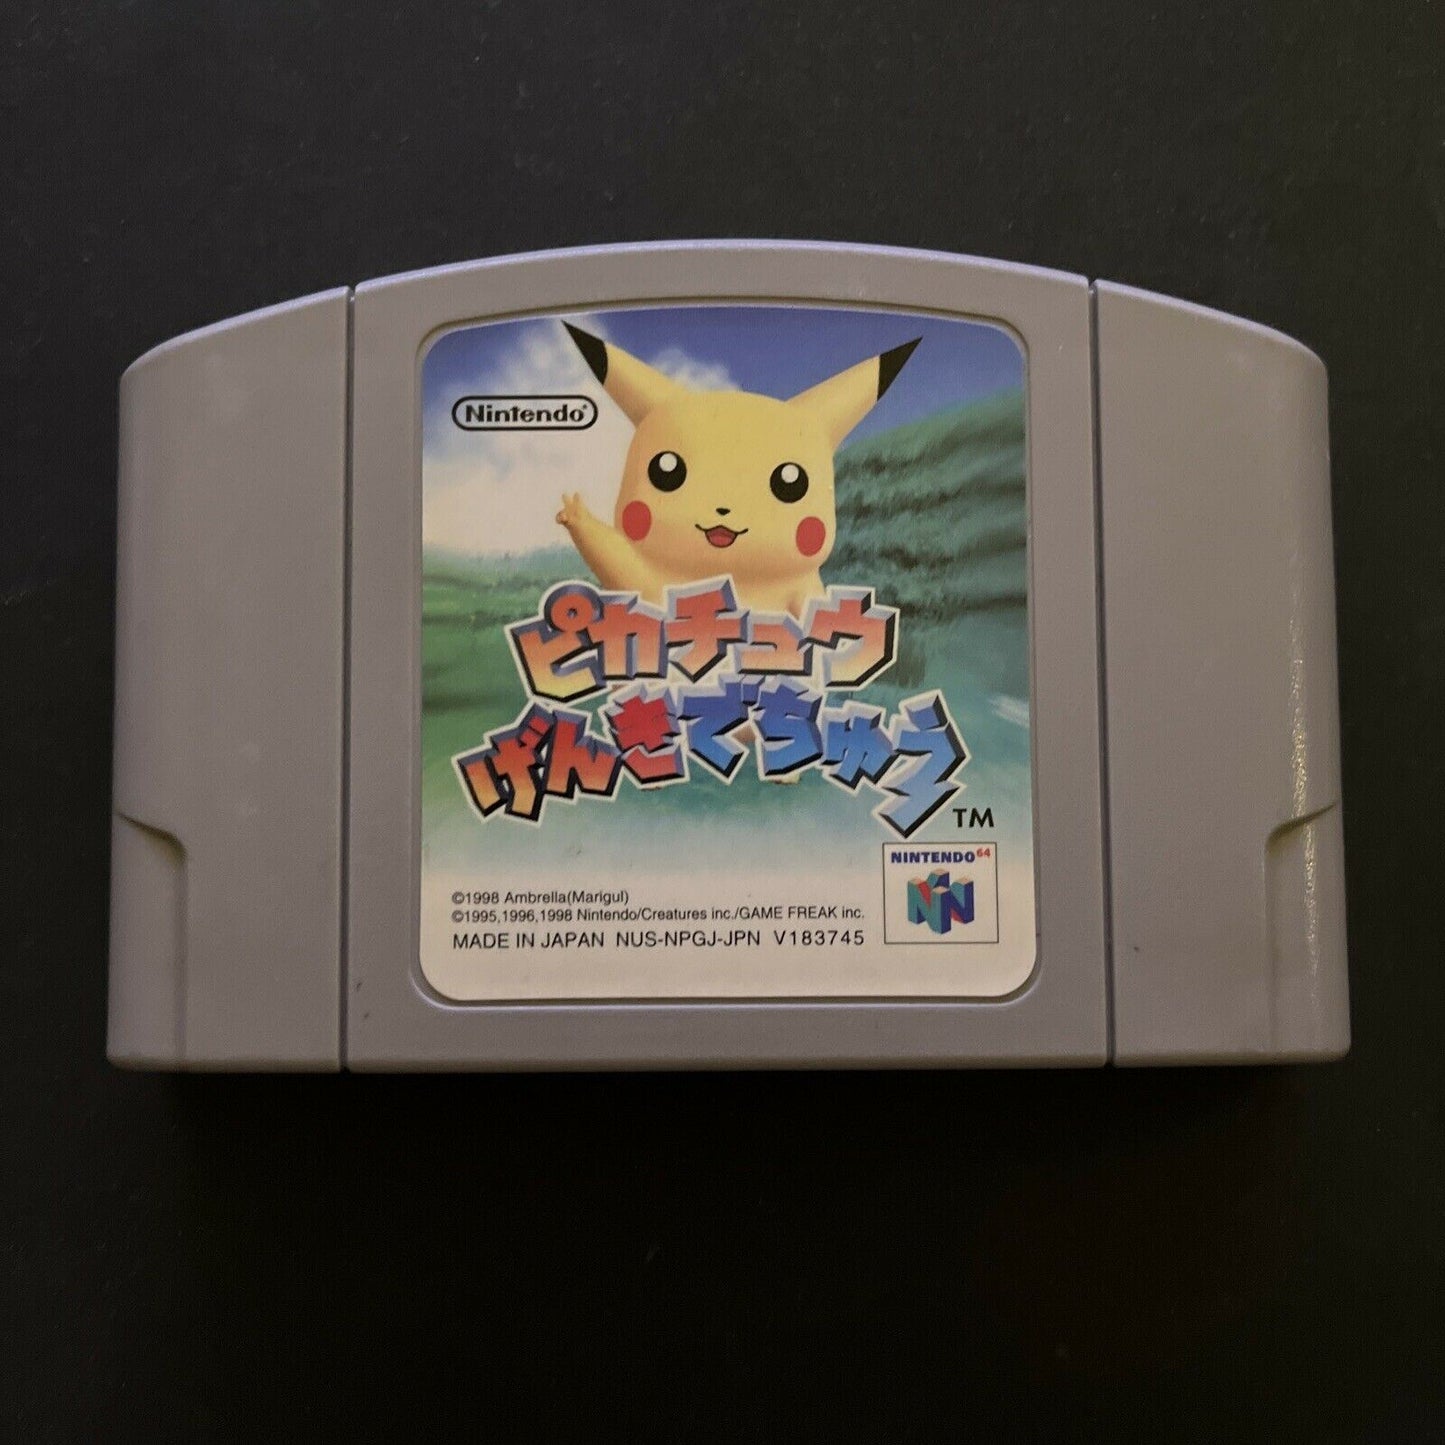 Pikachu Genki Dechuu (Hey You Pikachu) - Nintendo 64 NTSC-J JAPAN N64 Game